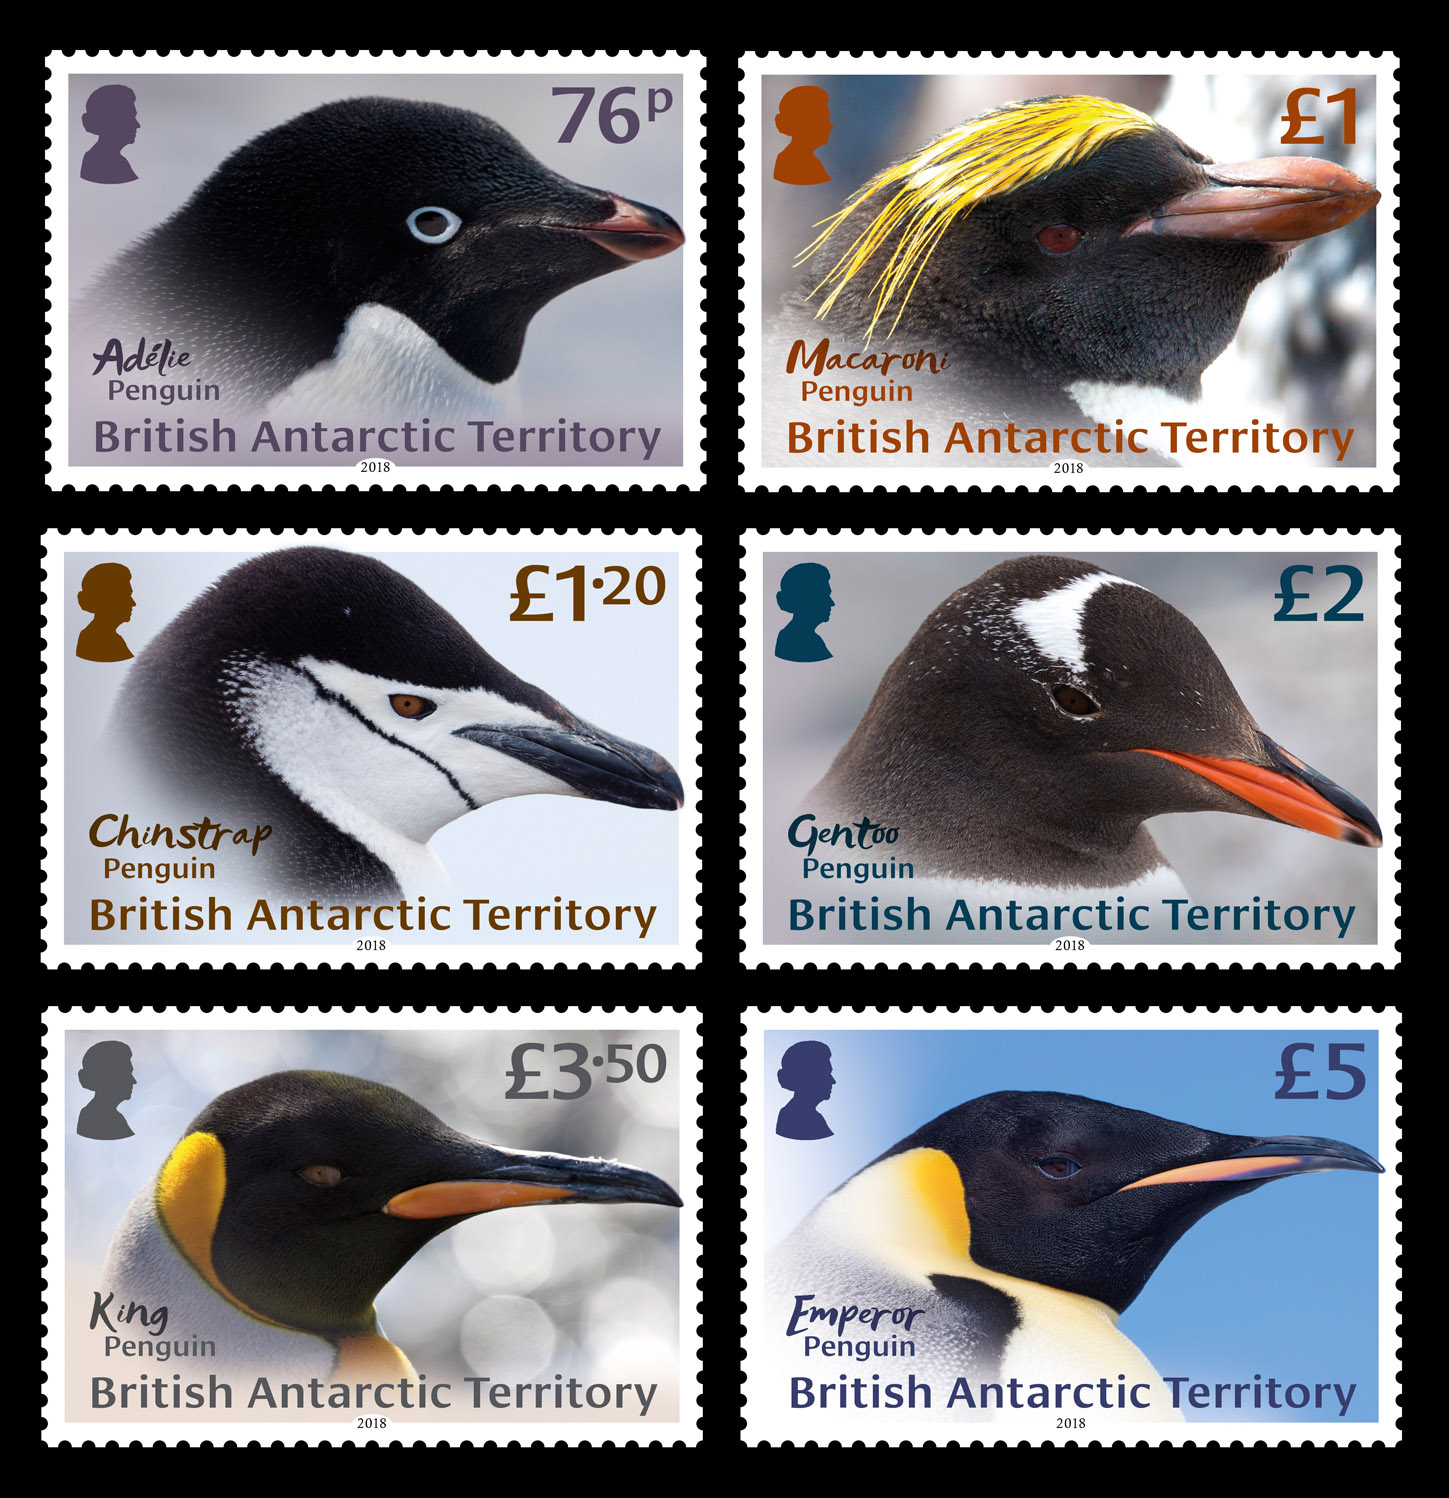 Six stamps of penguin headshots